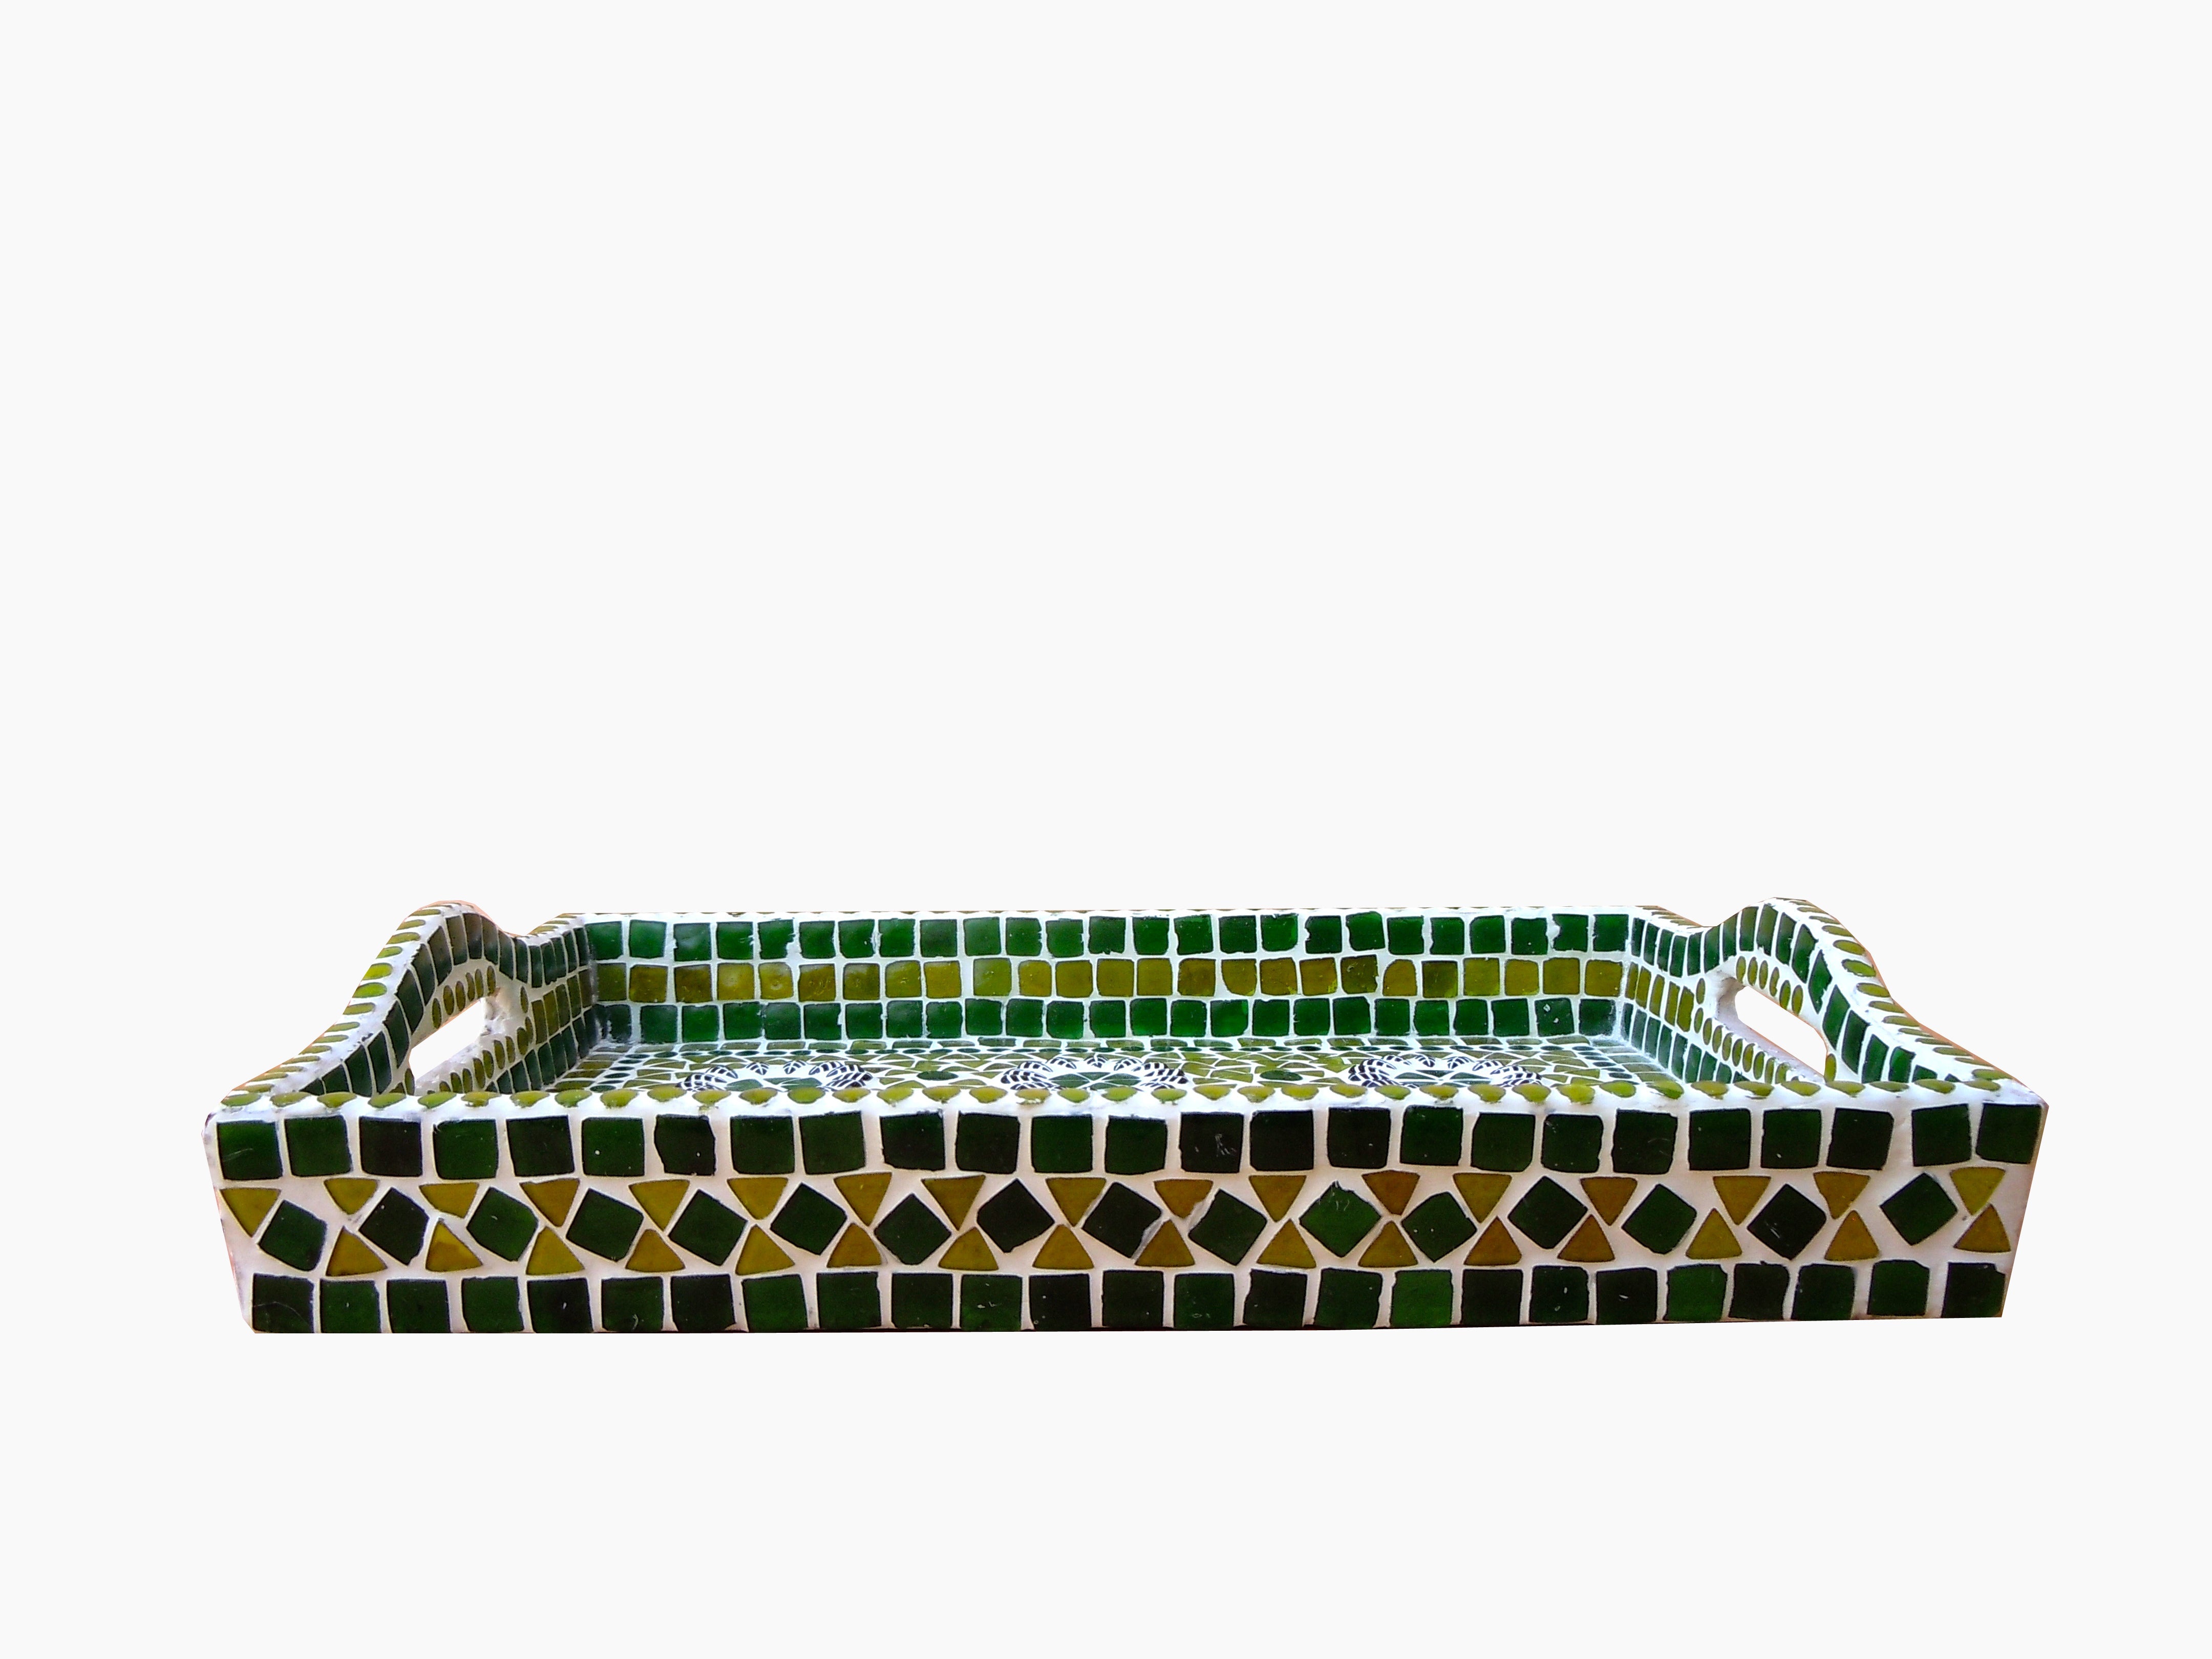 Mosaic Art Serving tray: Green